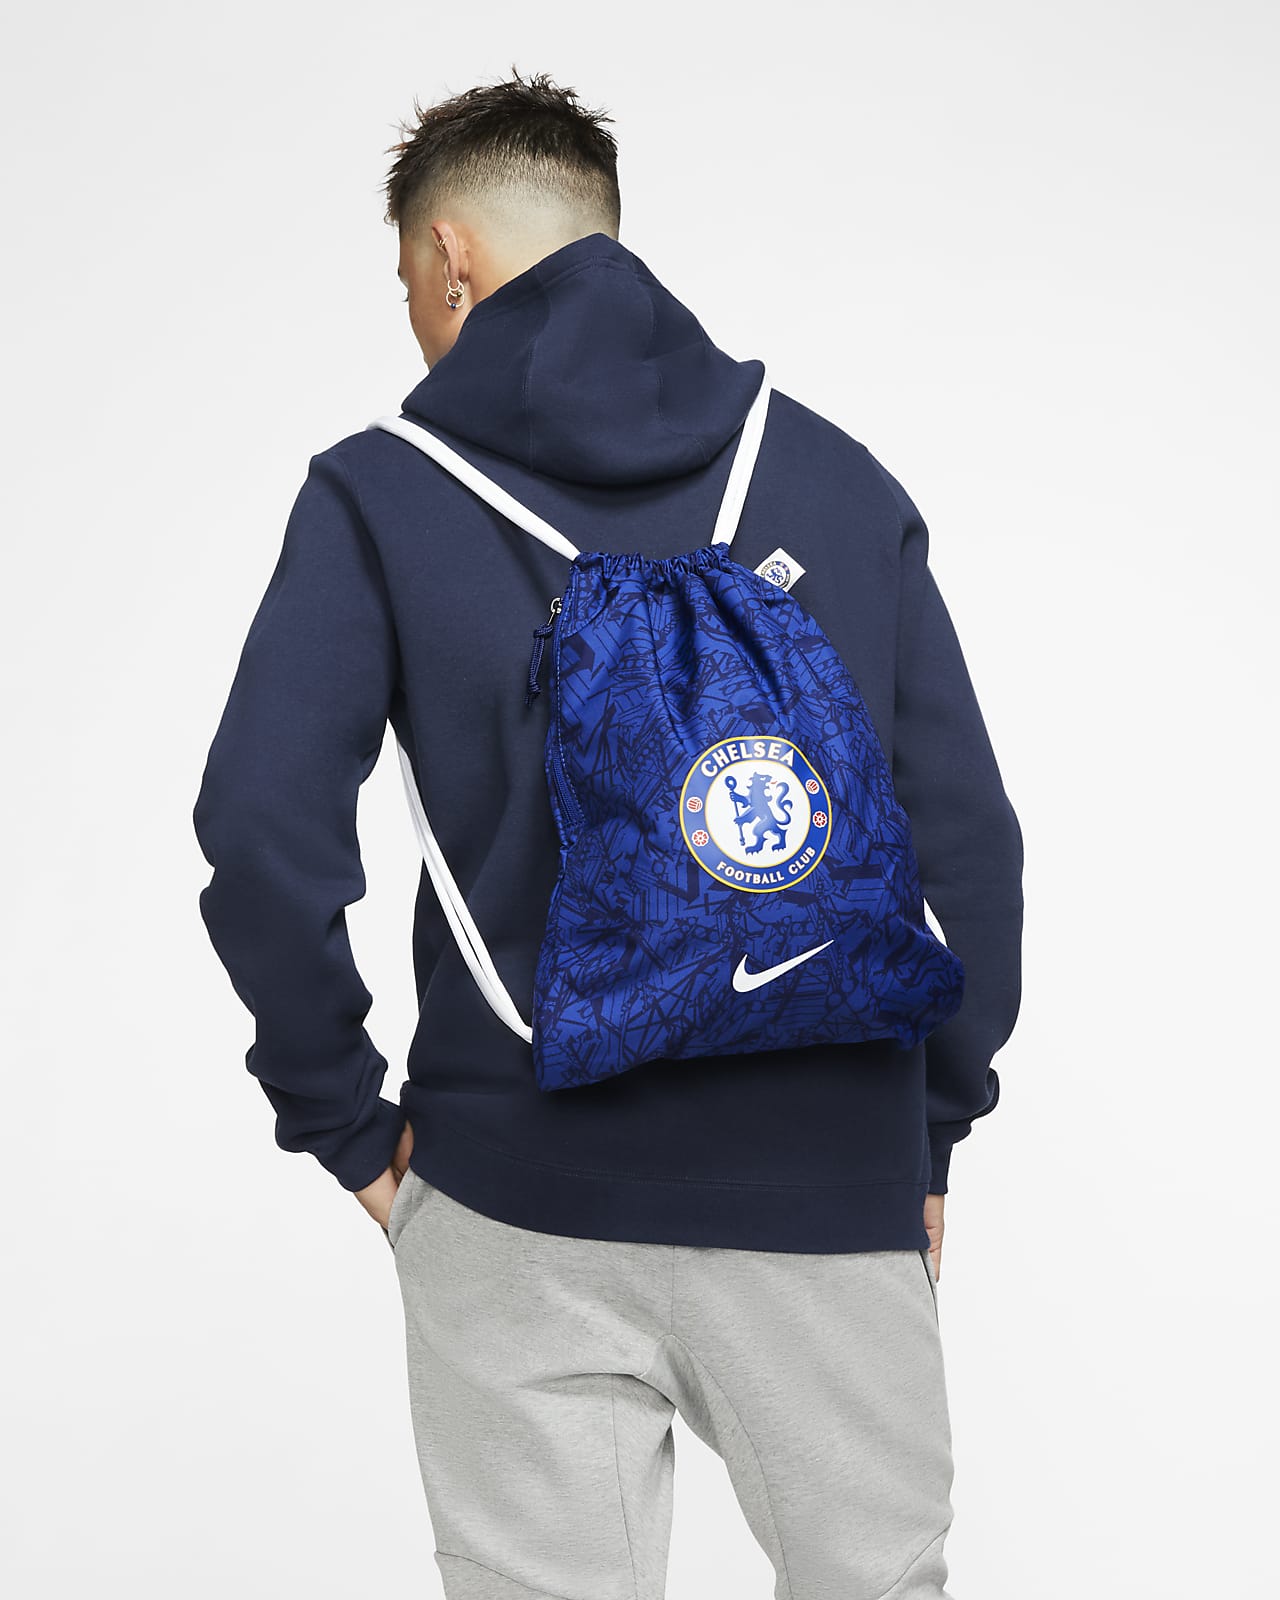 Chelsea FC Gym Bag Blue One Size